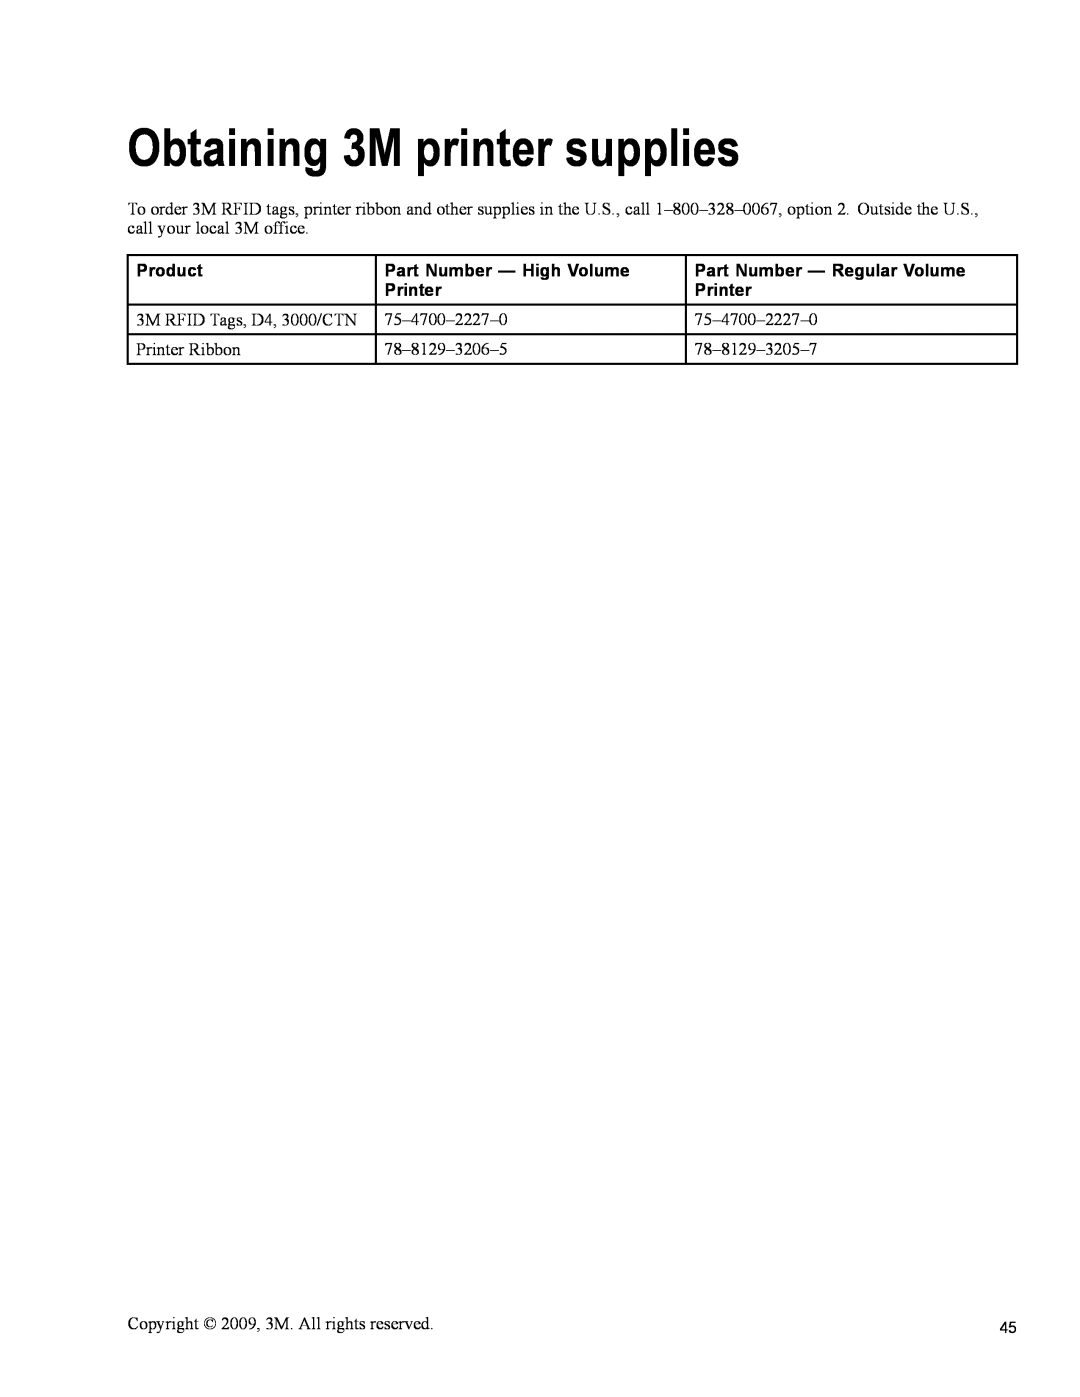 3M 813 Obtaining 3M printer supplies, Product, Part Number - High Volume, Part Number - Regular Volume, Printer 